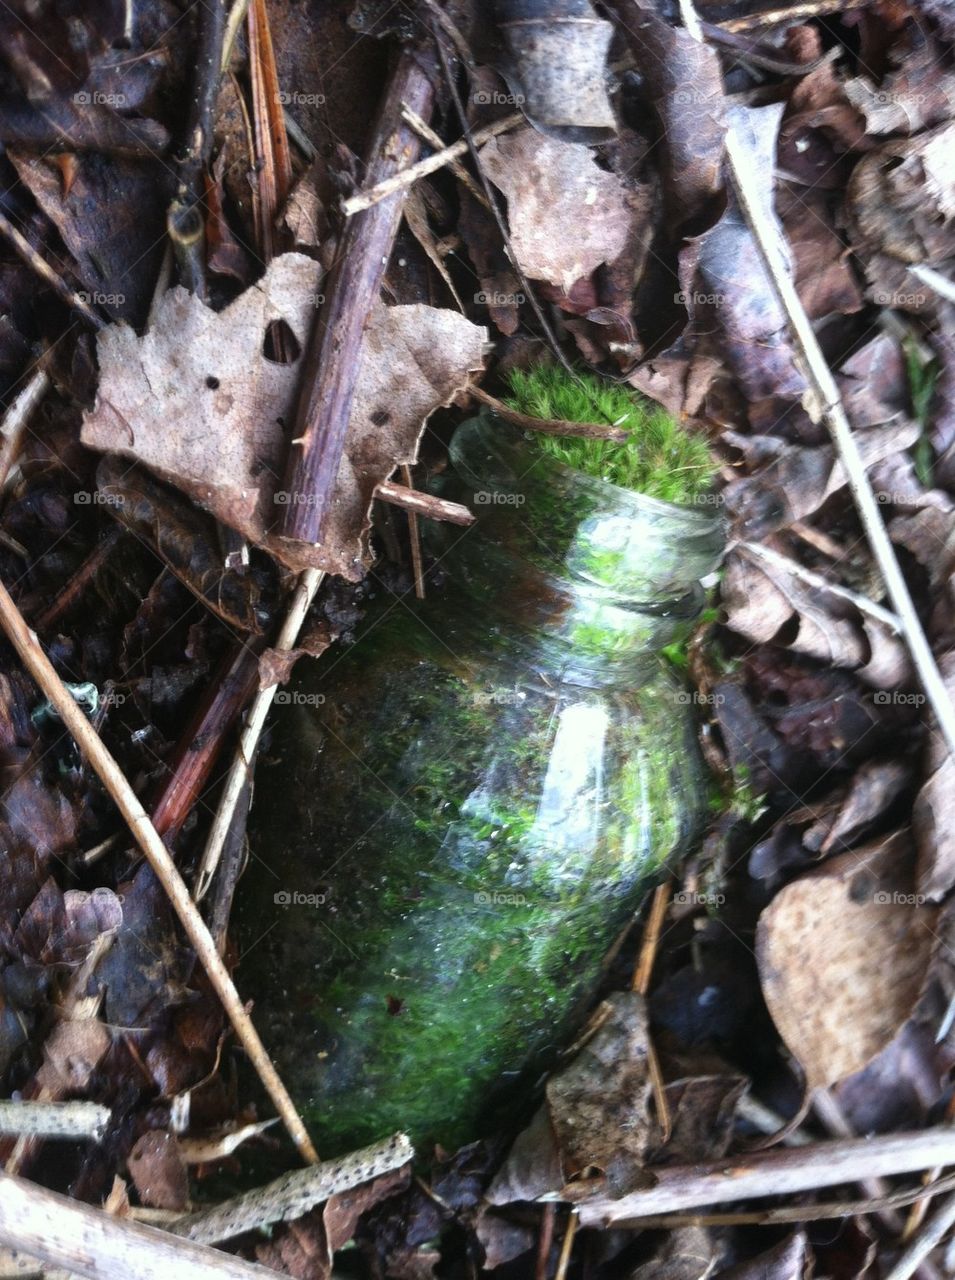 A bottle of moss